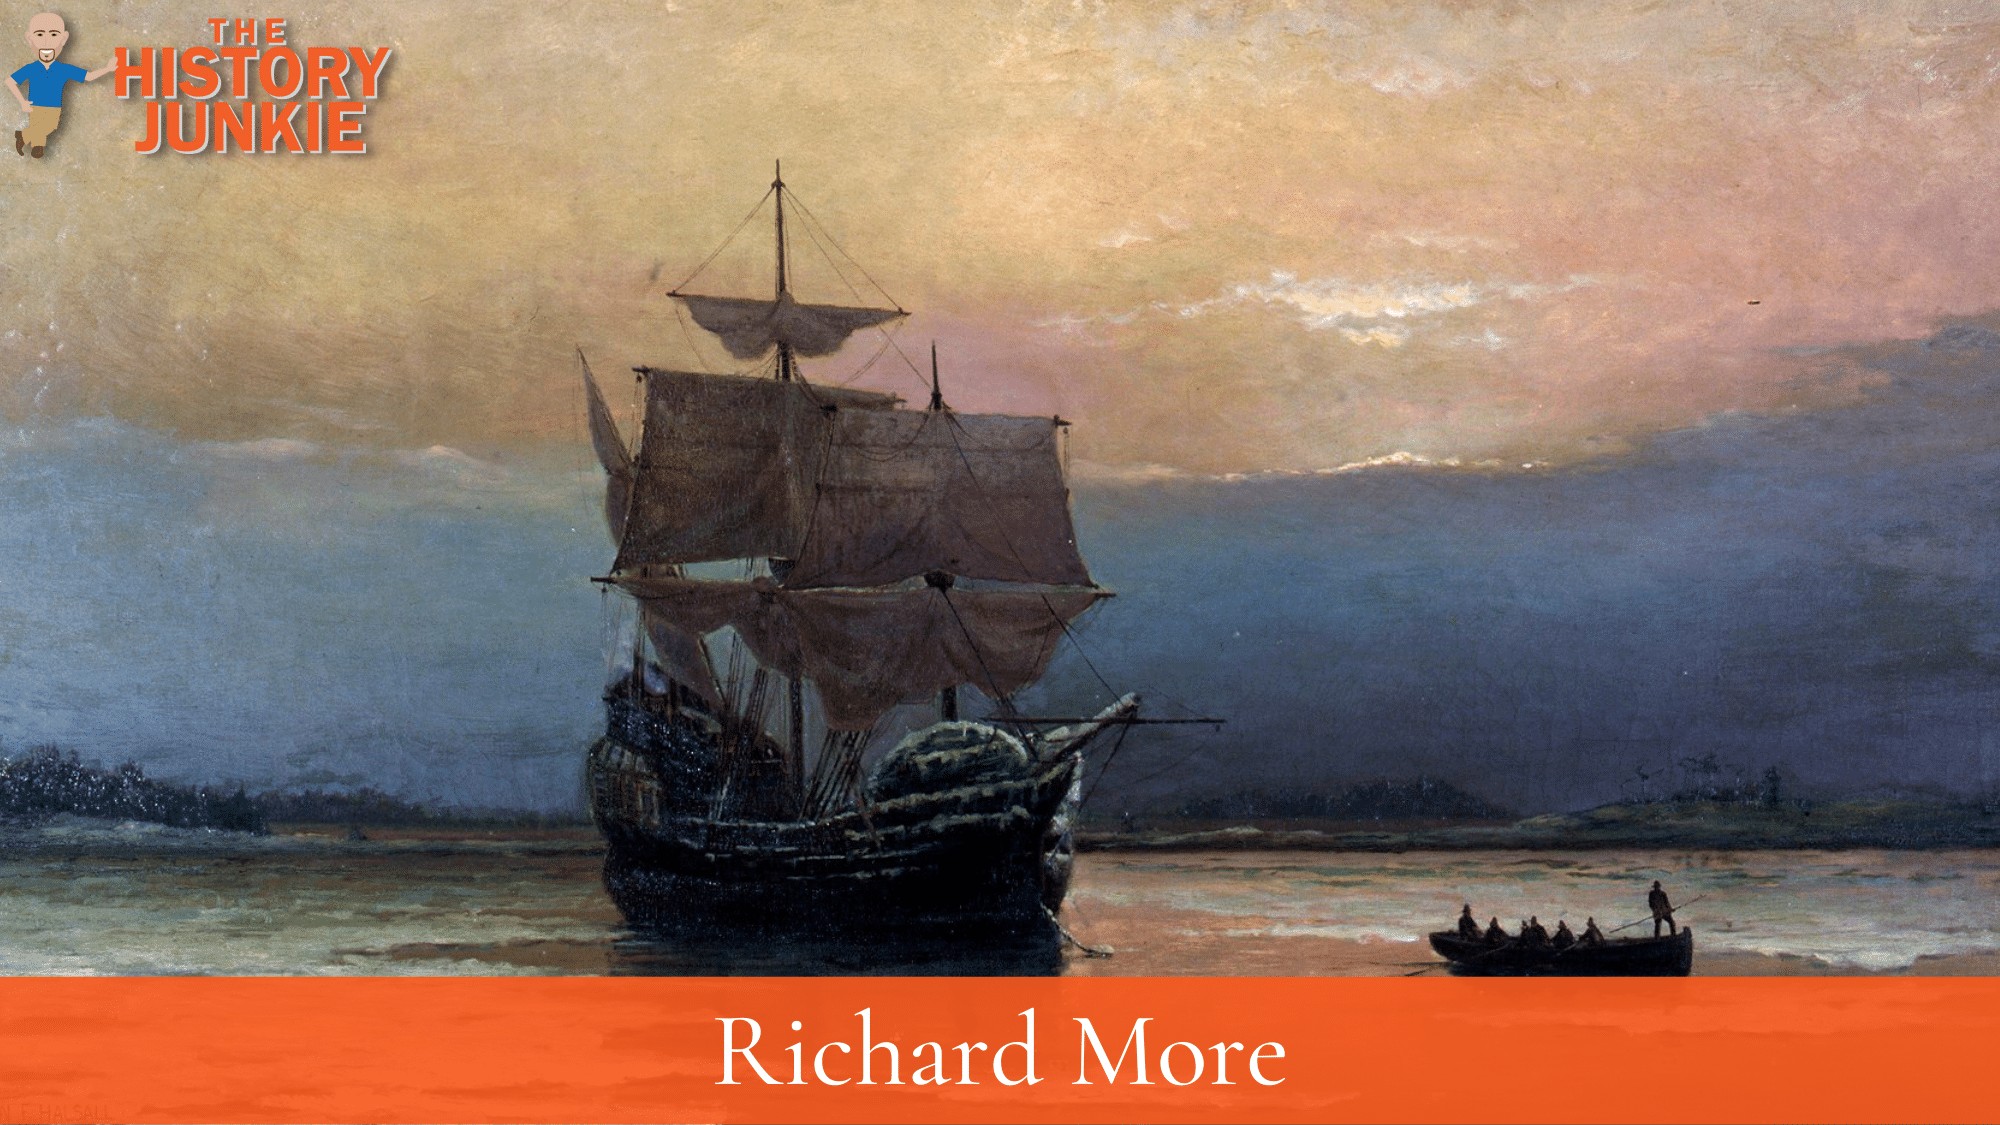 Richard More